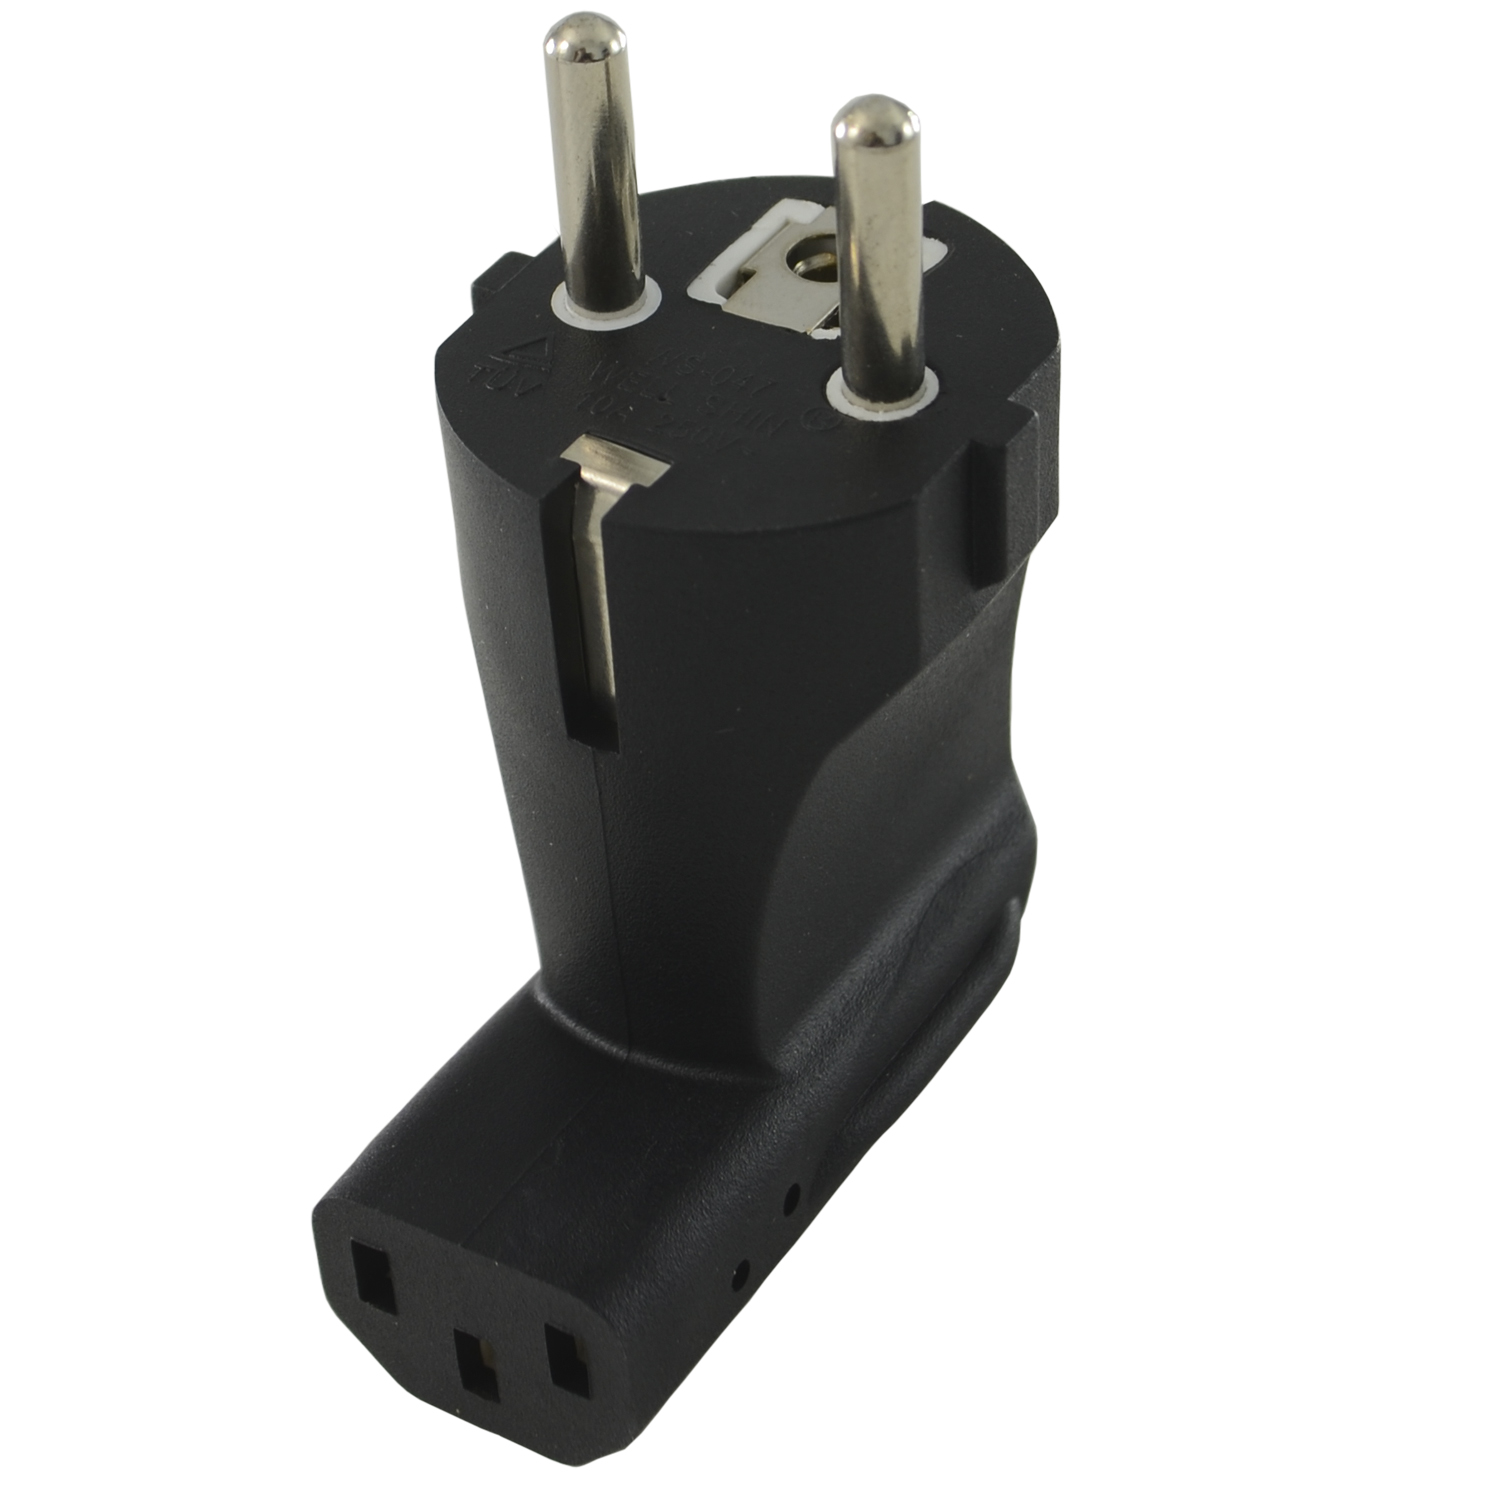 Conntek 30021 CEE 7/7 Europe Schuko to IEC C13 Travel Plug Adapter